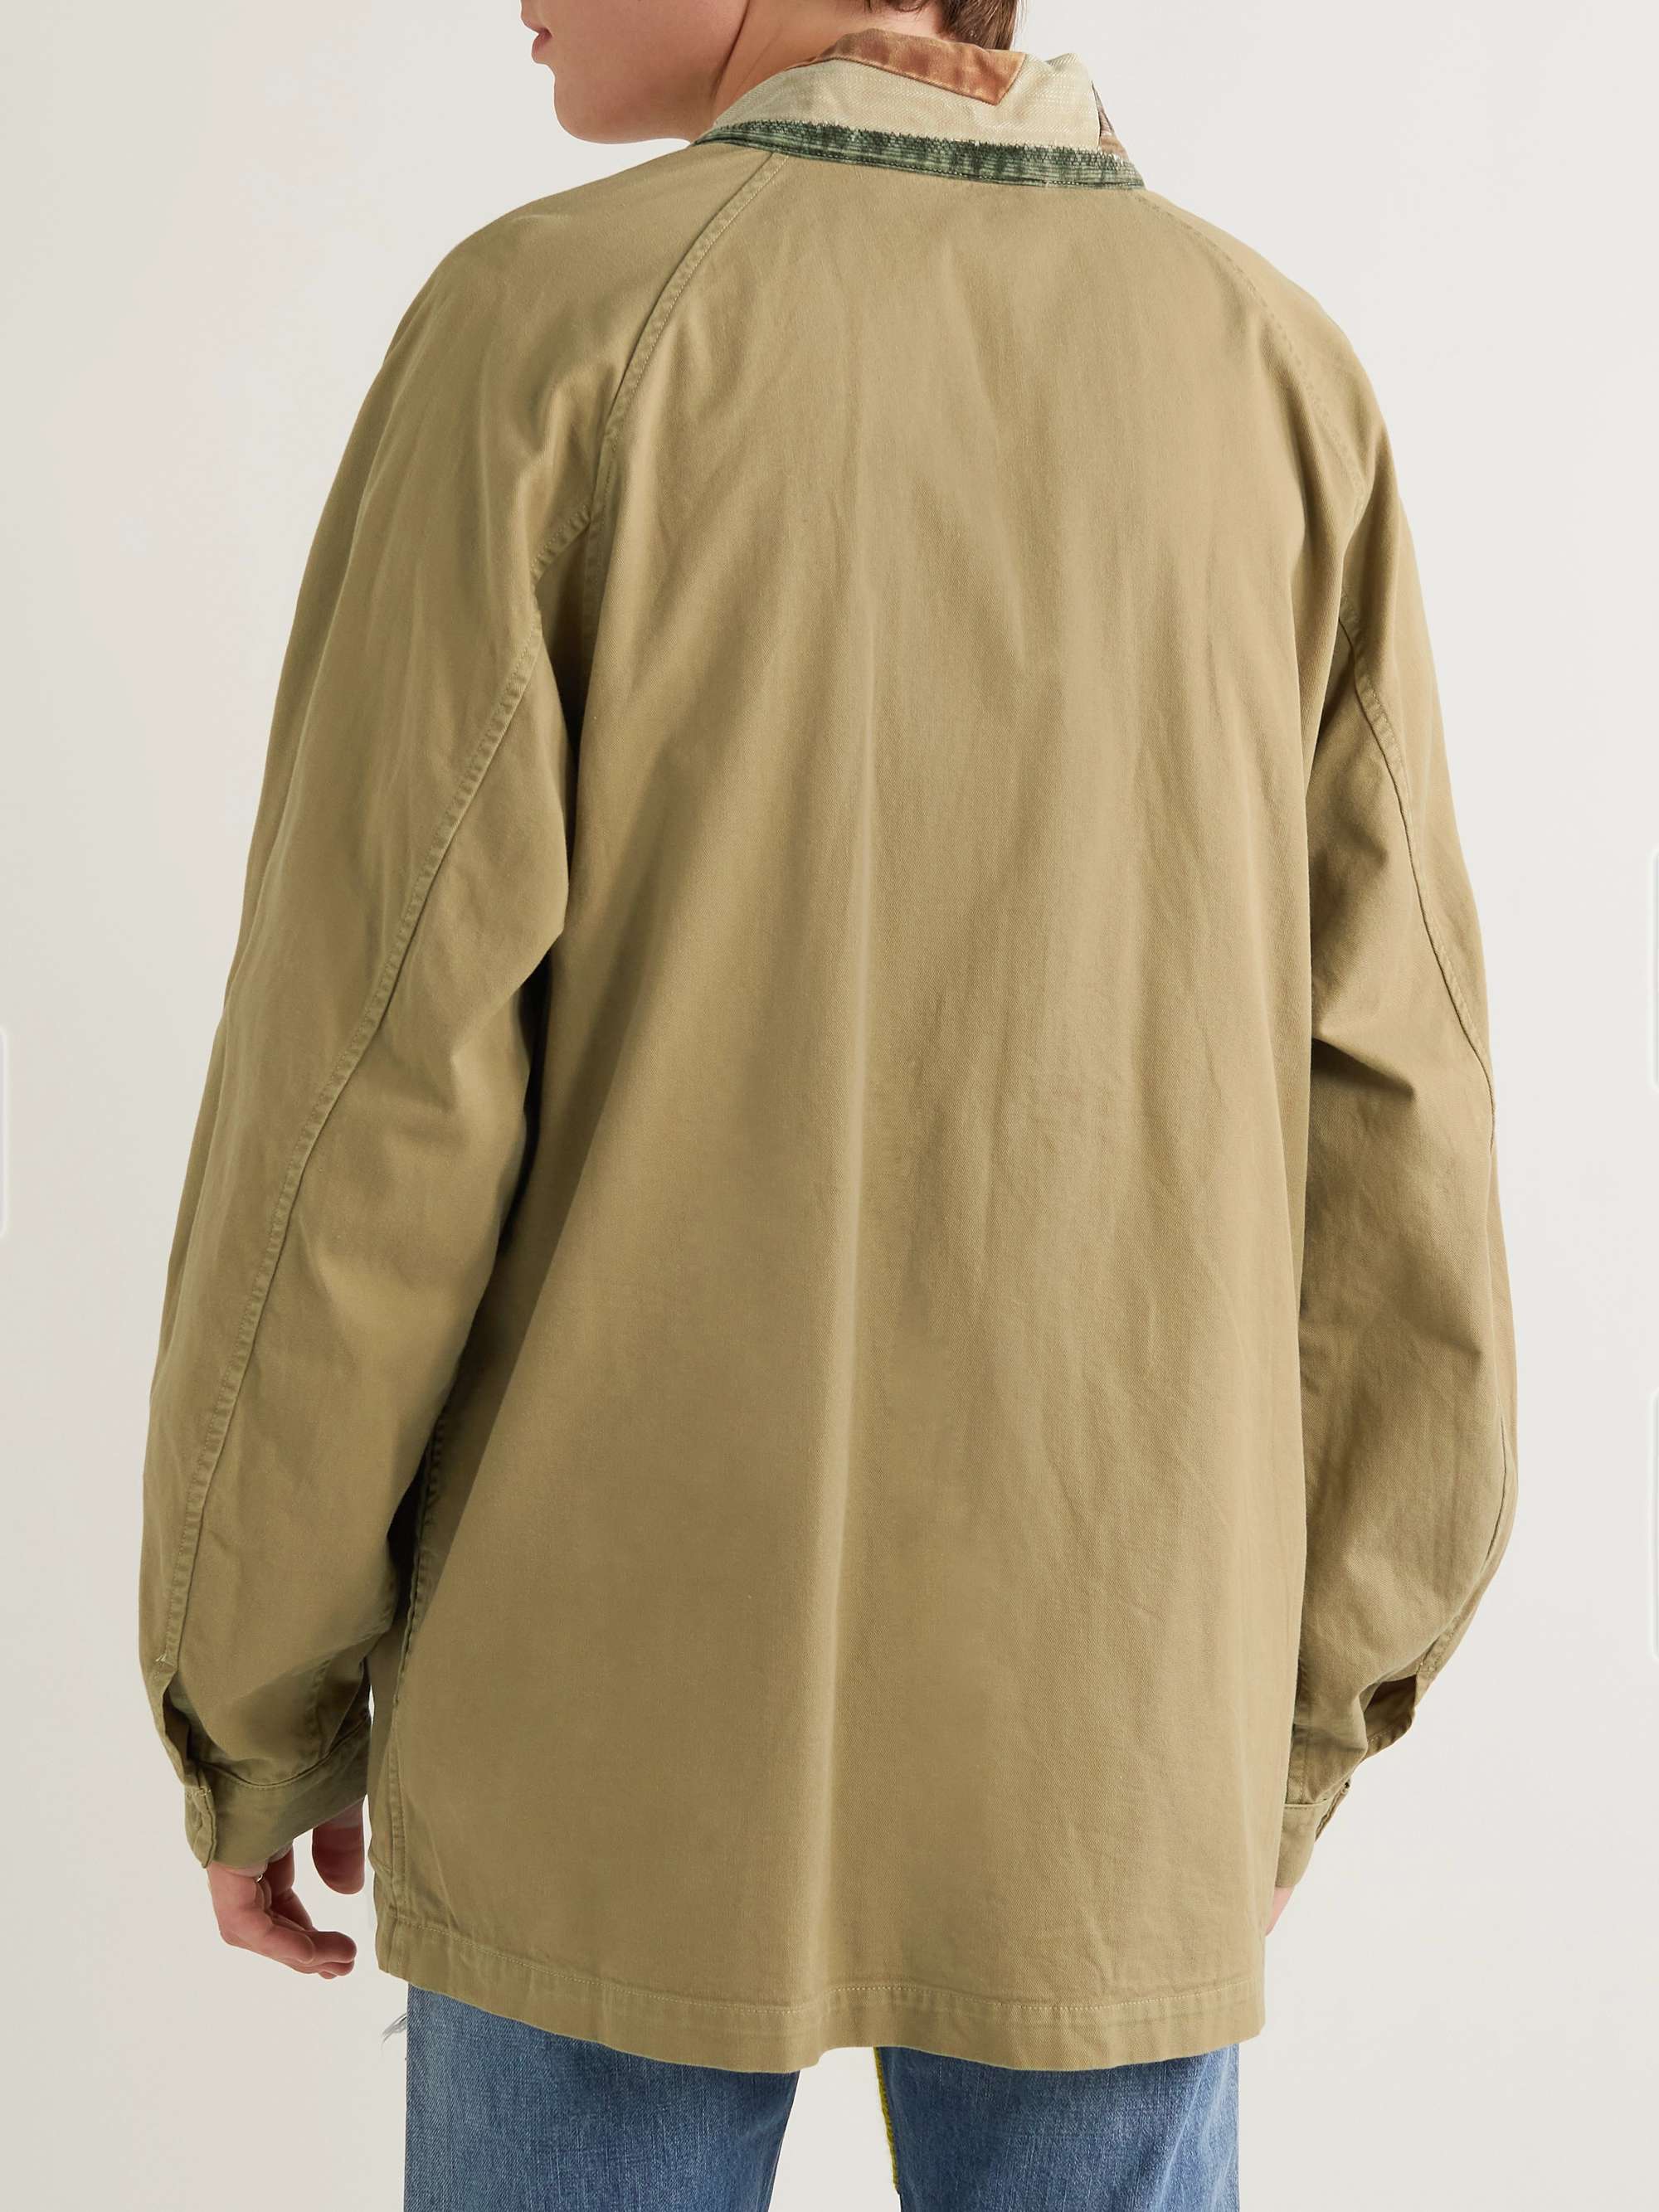 KAPITAL Tiger Juddbhan Corduroy-Trimmed Printed Cotton-Twill Shirt